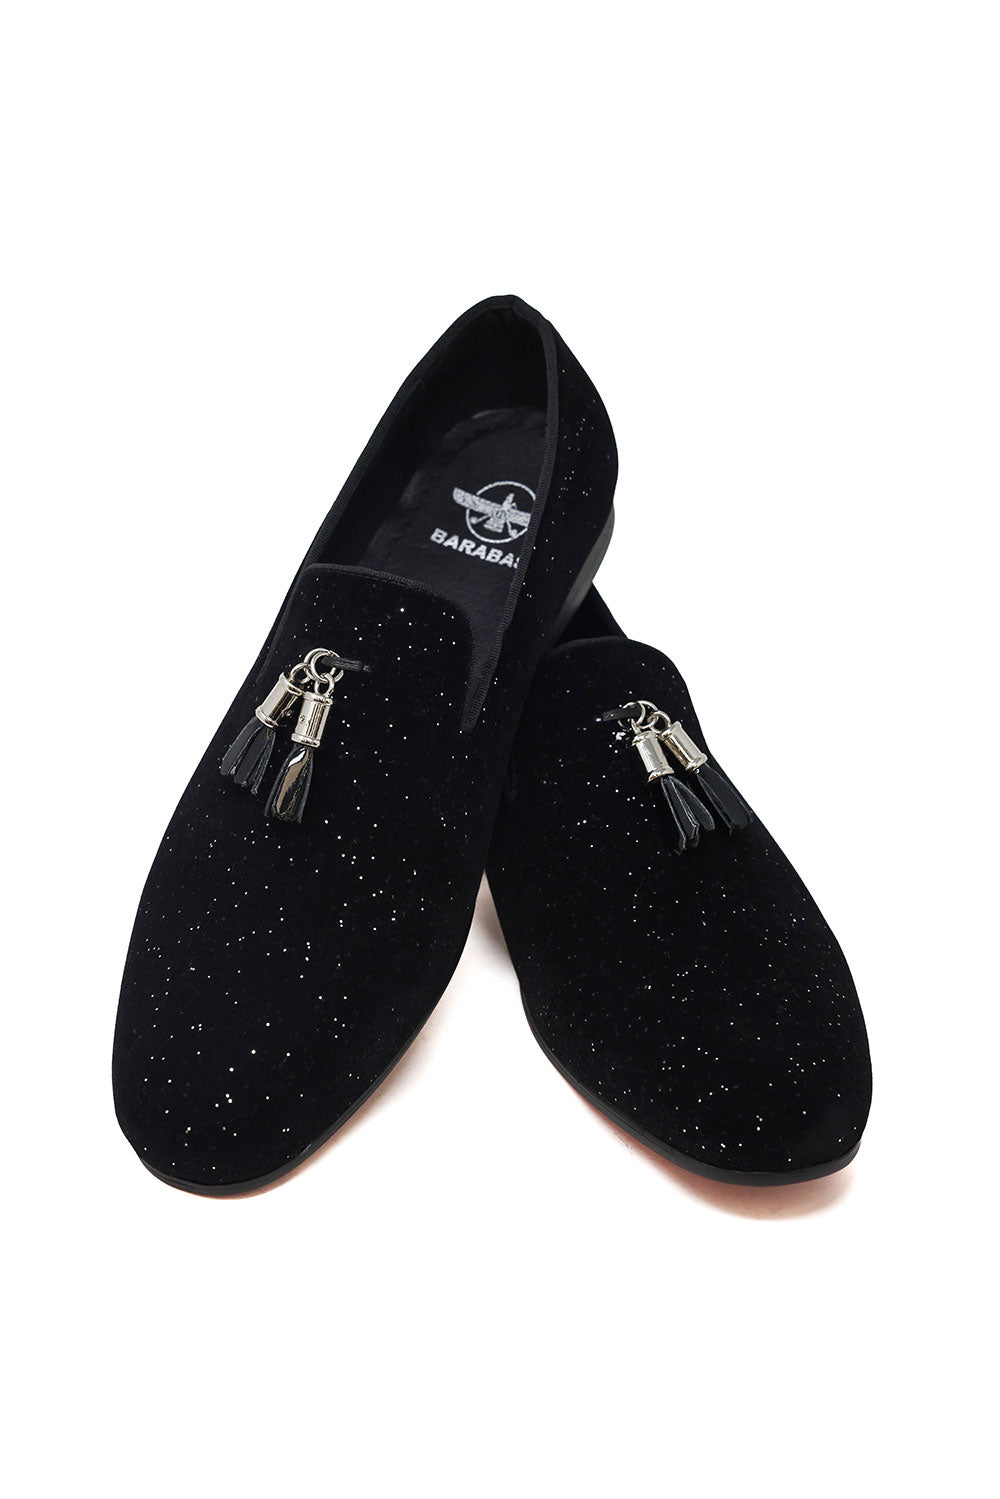 BARABAS Men's Glittery Shiny Luxury Tassel Loafer Shoes 2SH3106 Black Gold